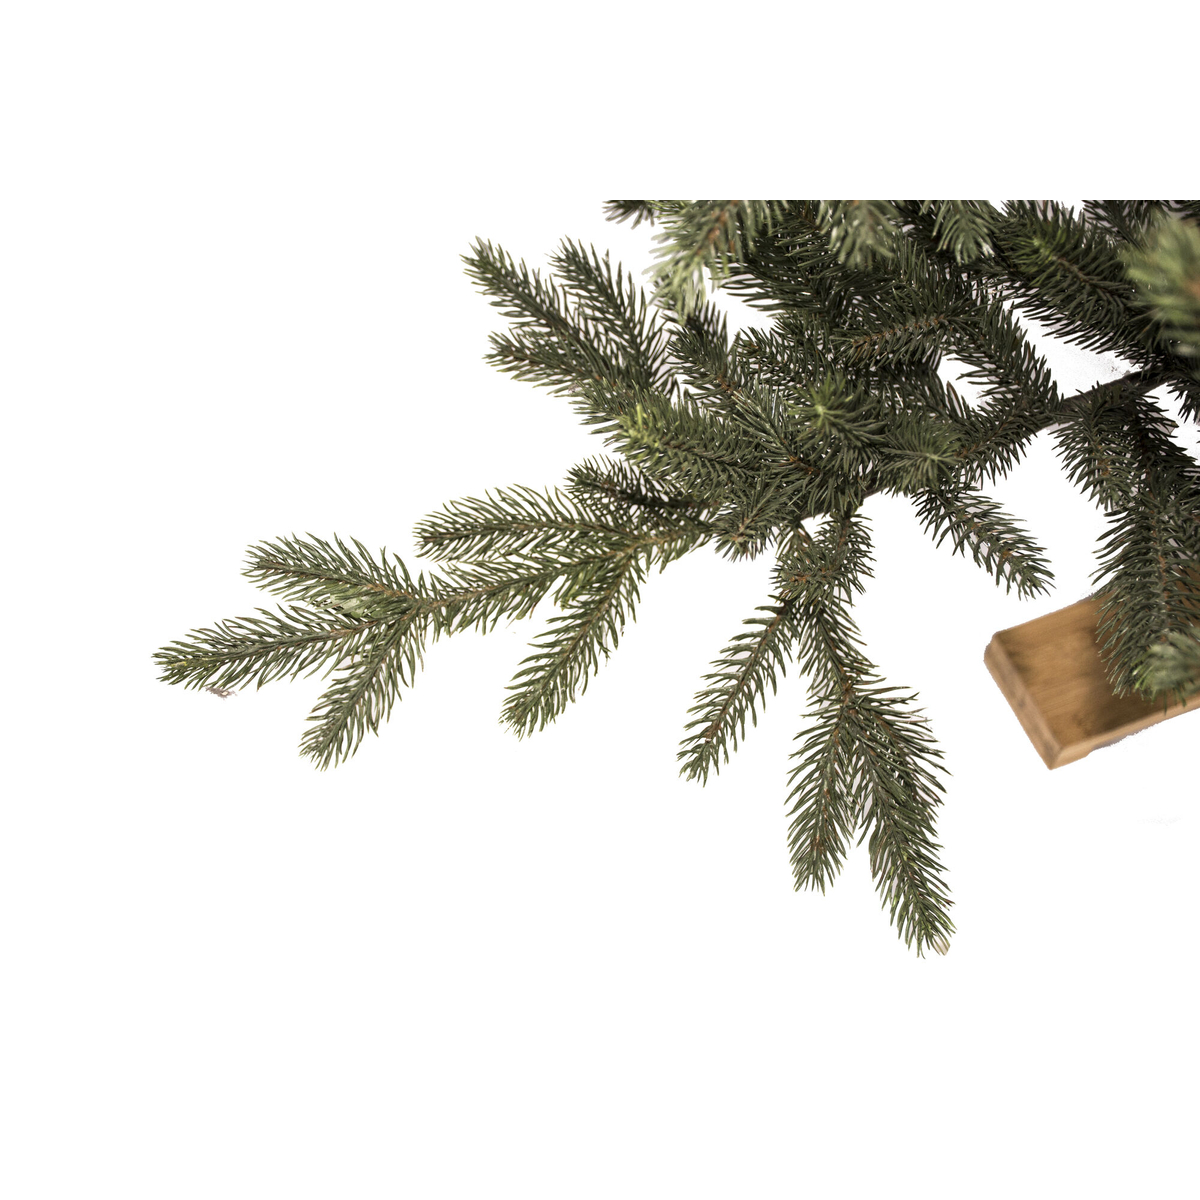 Our Nordic Christmas kunstkerstboom 213cm Arkansas Dark Green 